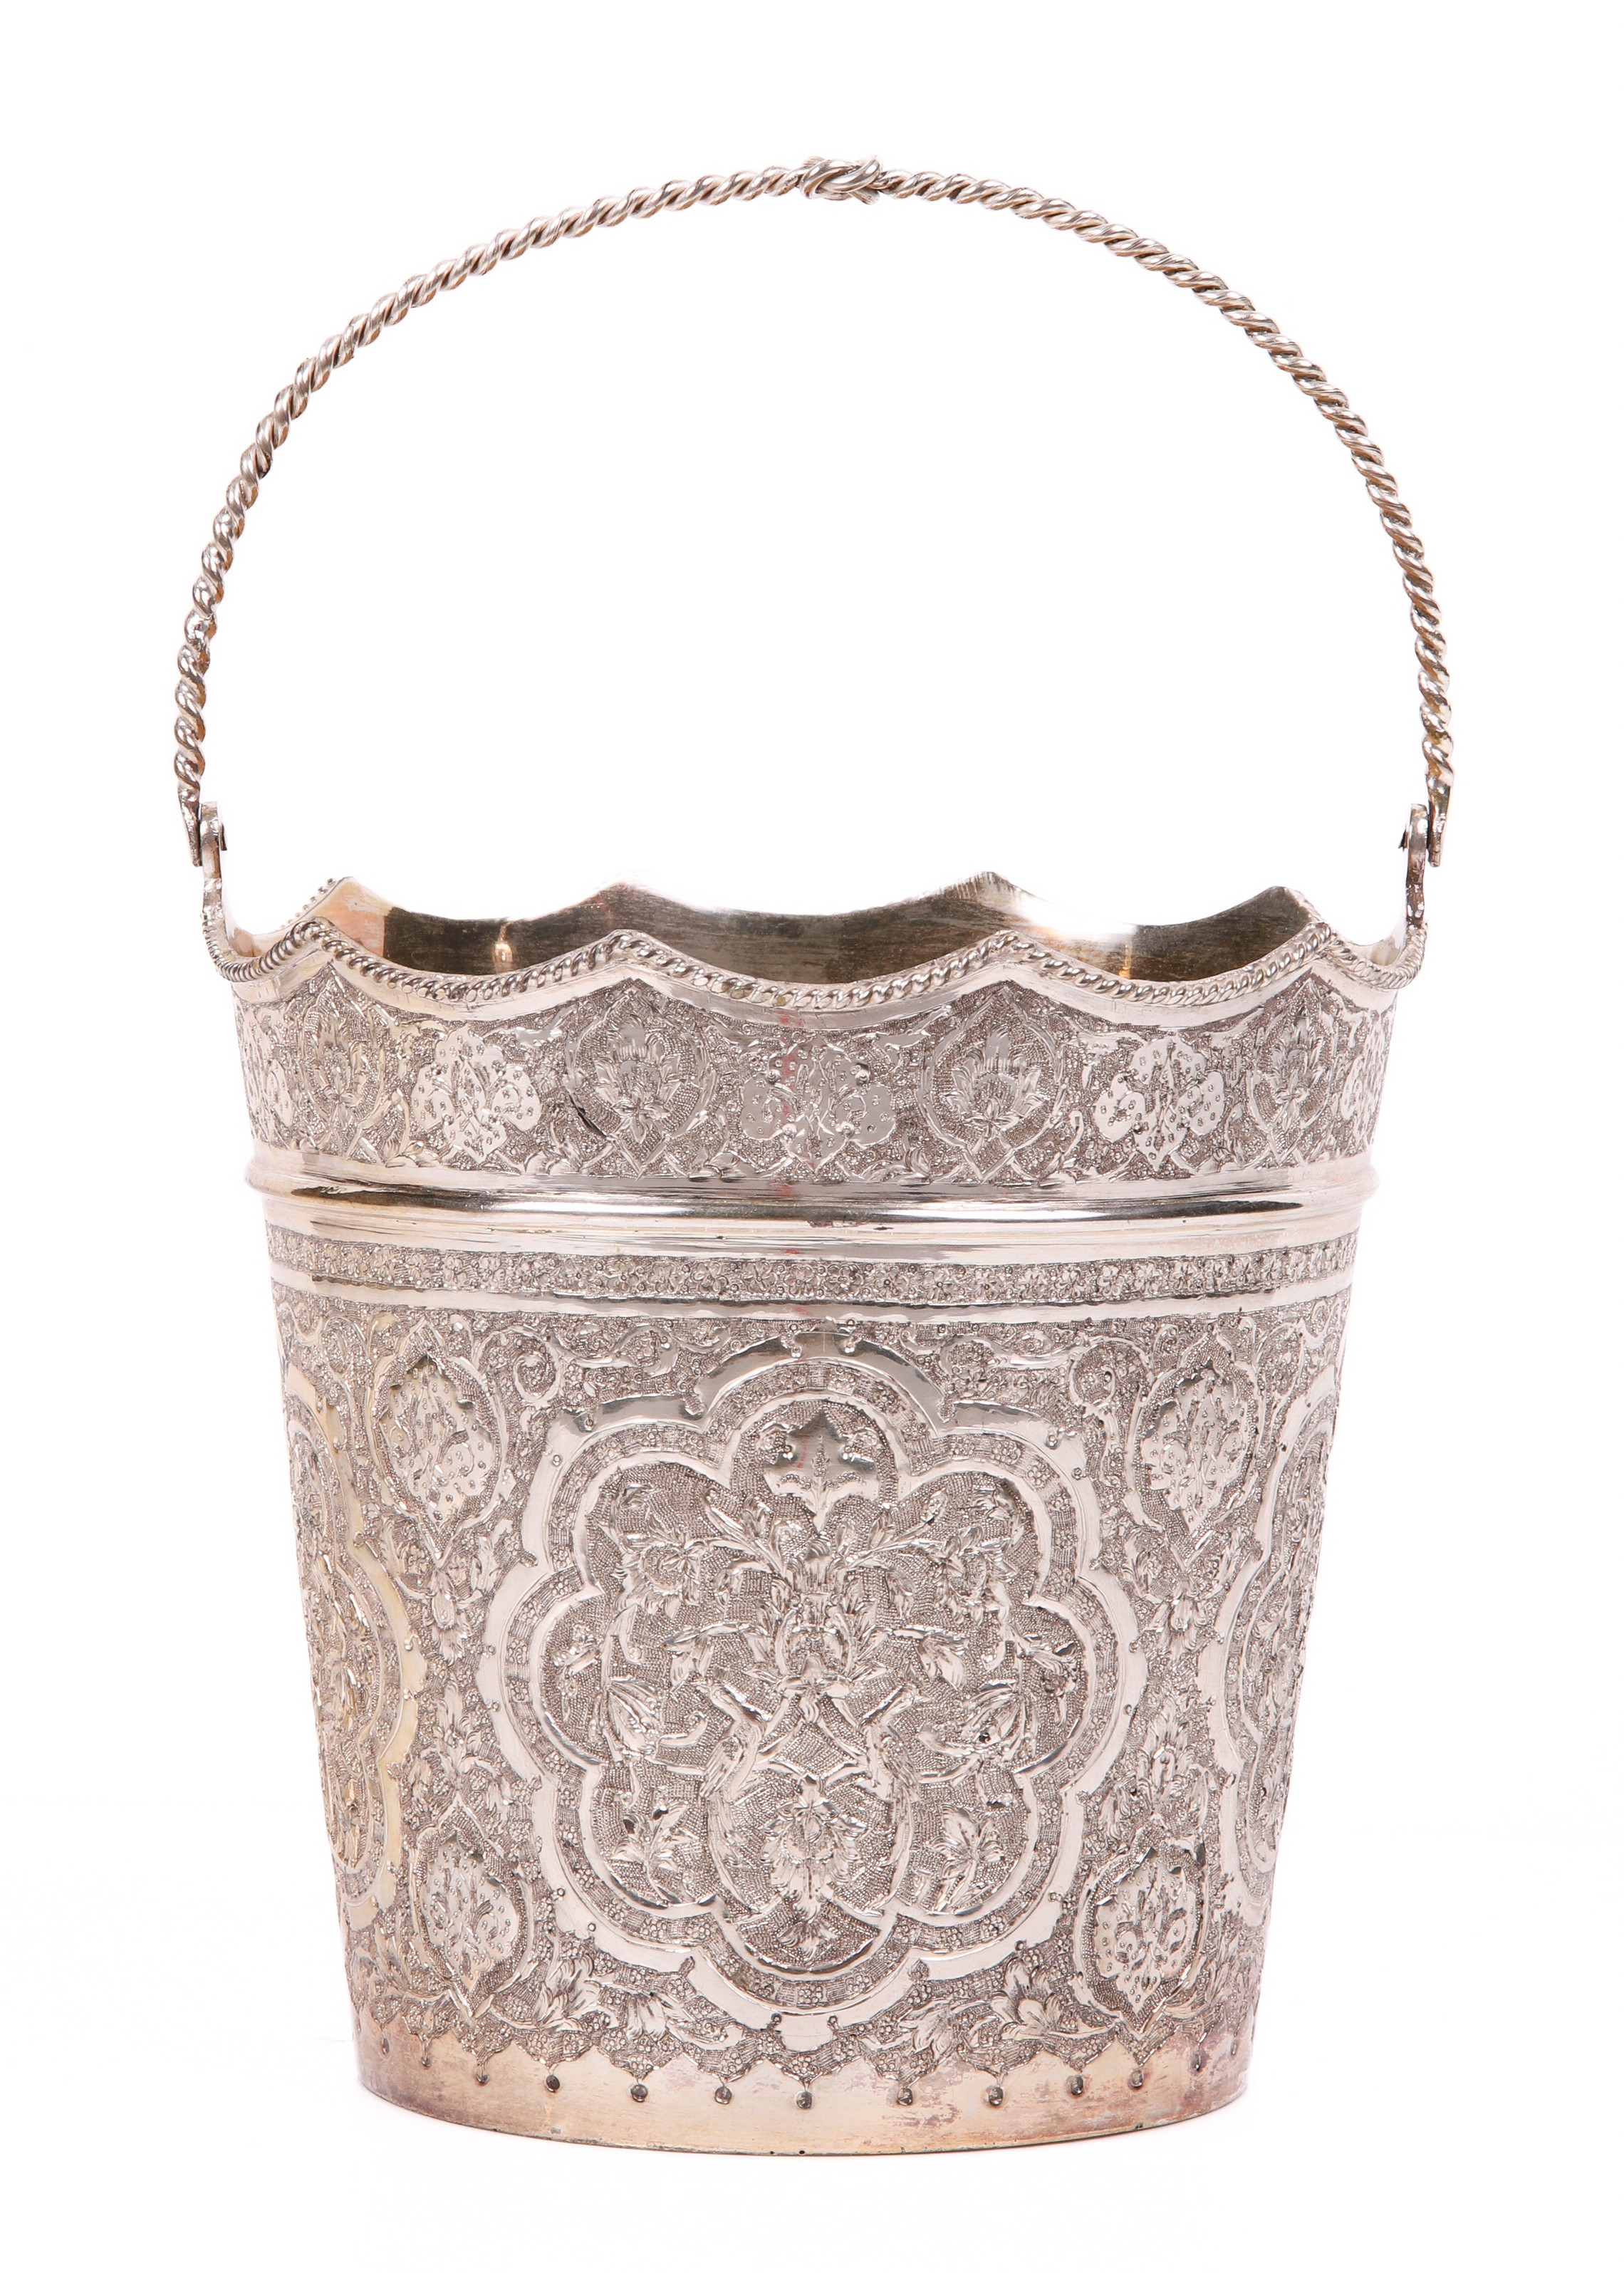 Persian silver swing handle basket  3b44d4